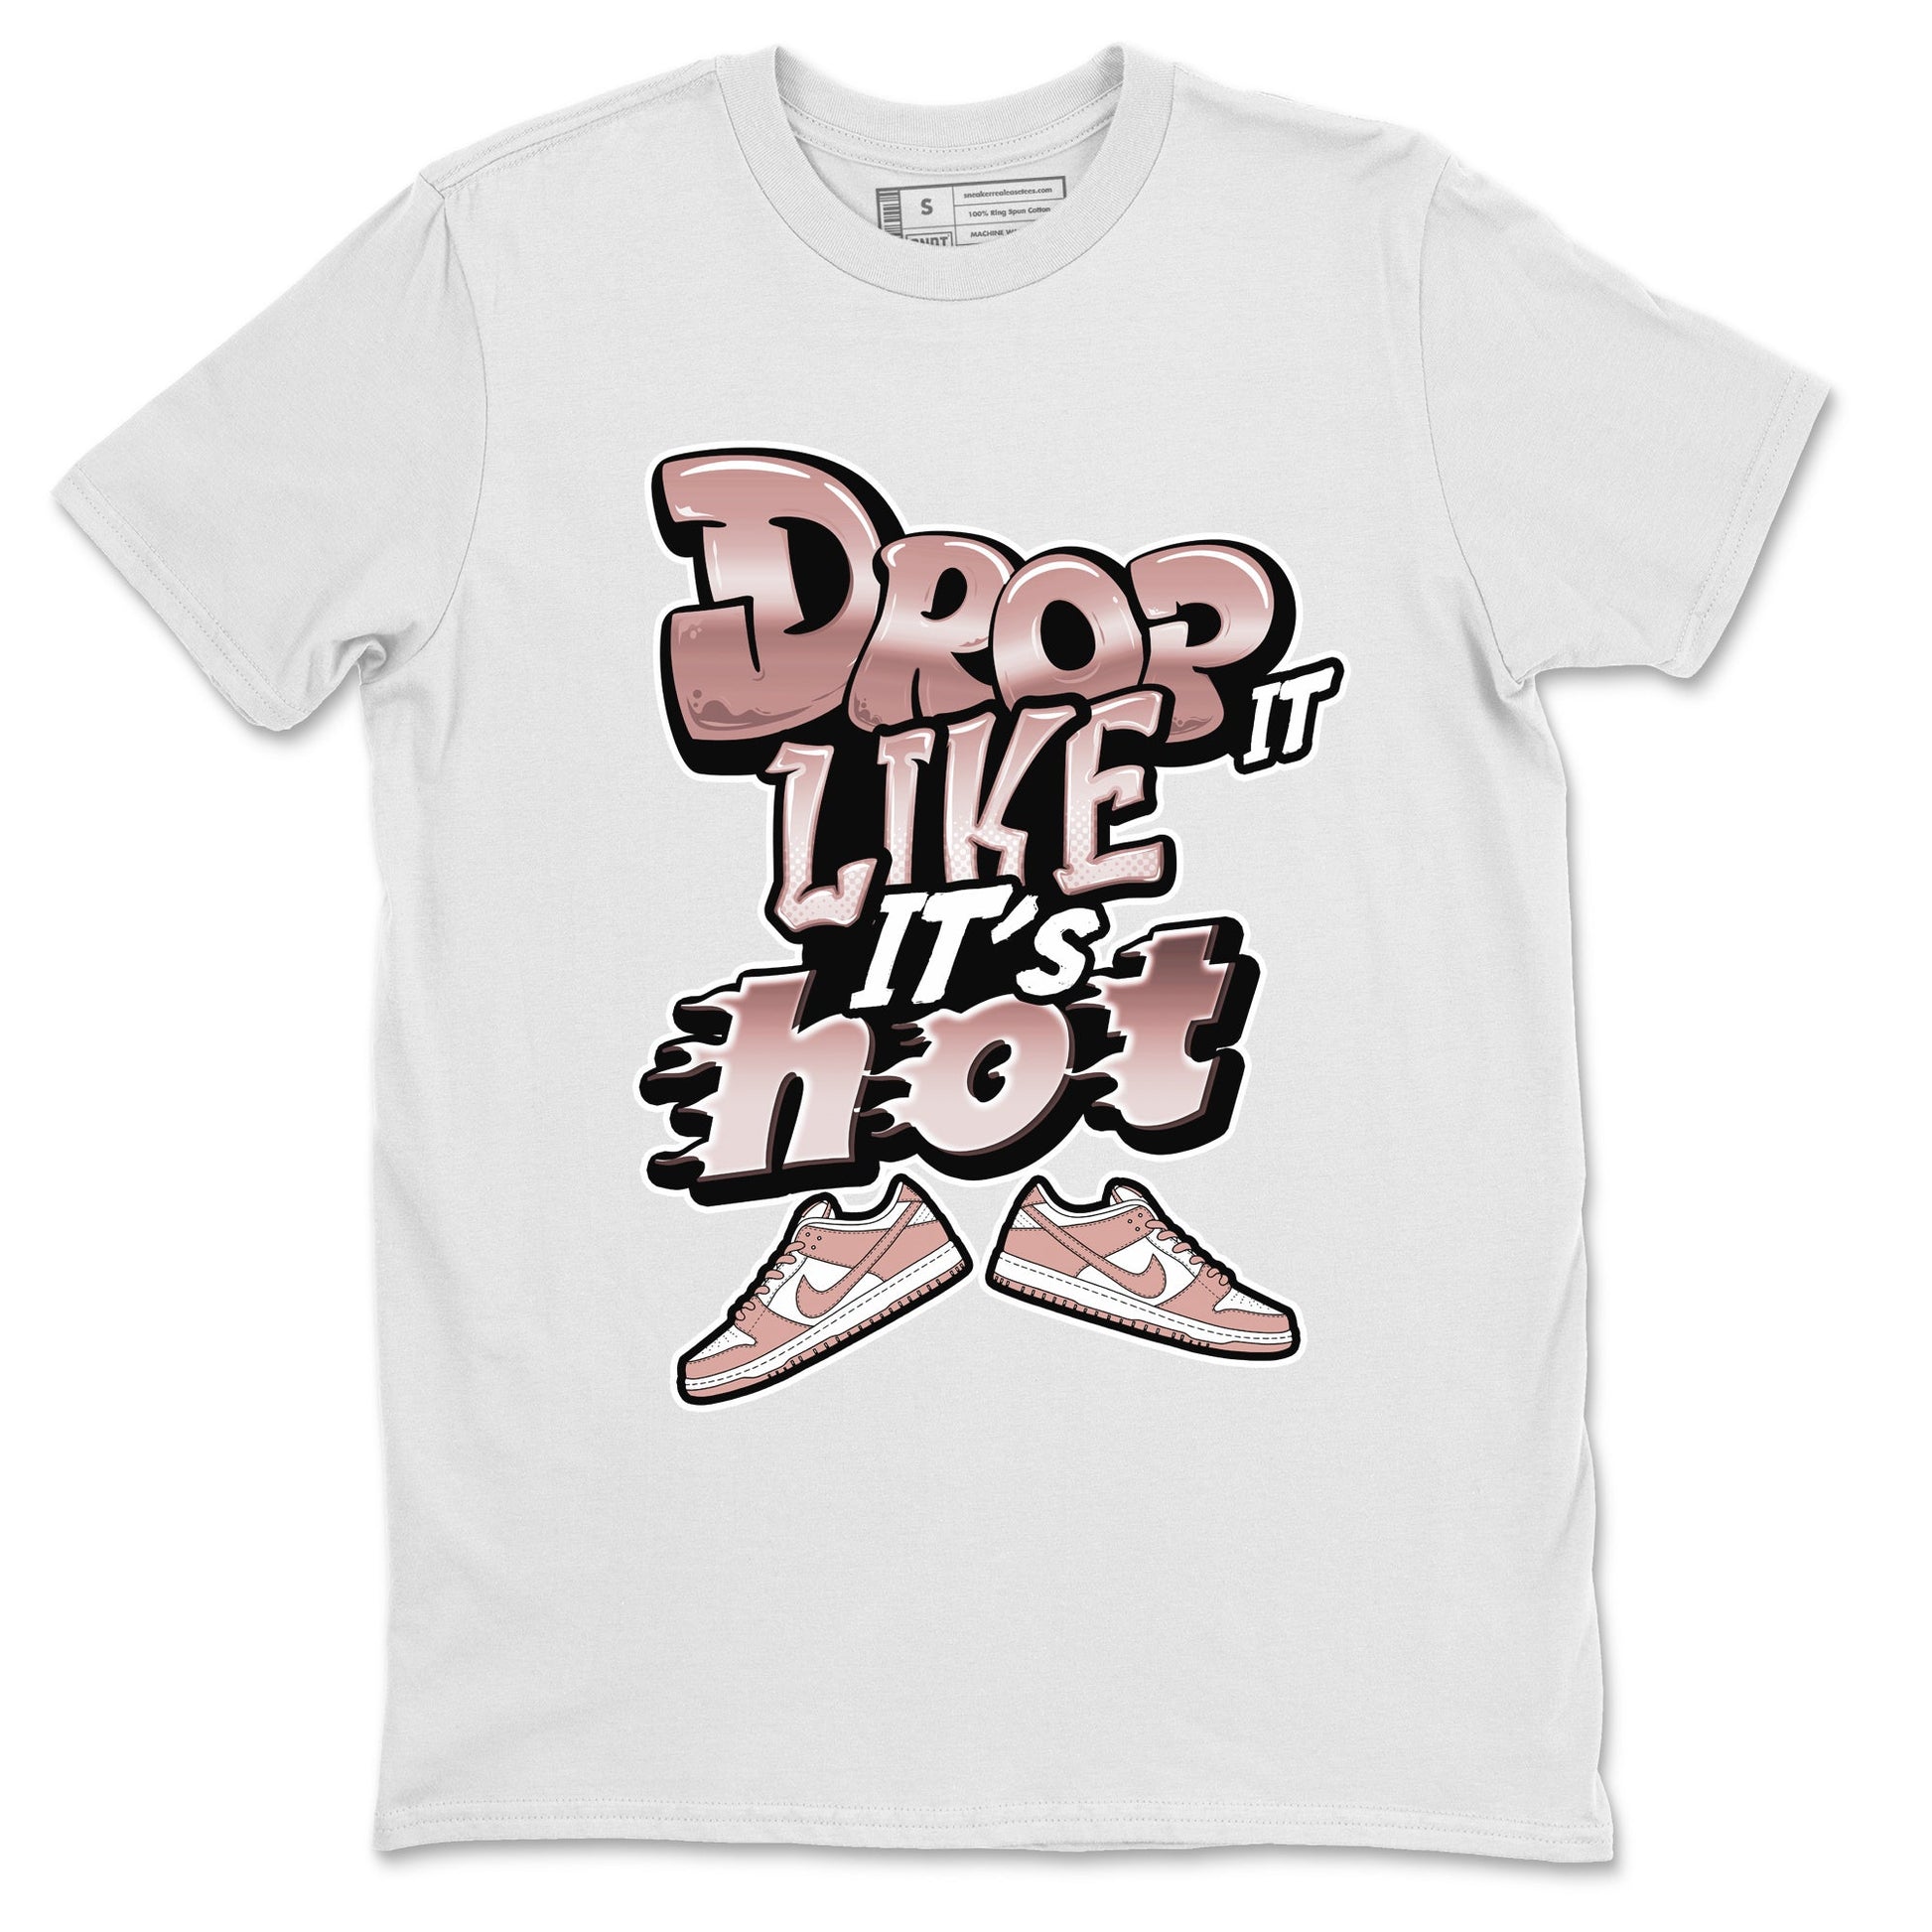 Dunk Rose Whisper shirt to match jordans Drop It Like It's Hot sneaker tees Nike Dunk LowRose Whisper SNRT Sneaker Release Tees Unisex White 2 T-Shirt